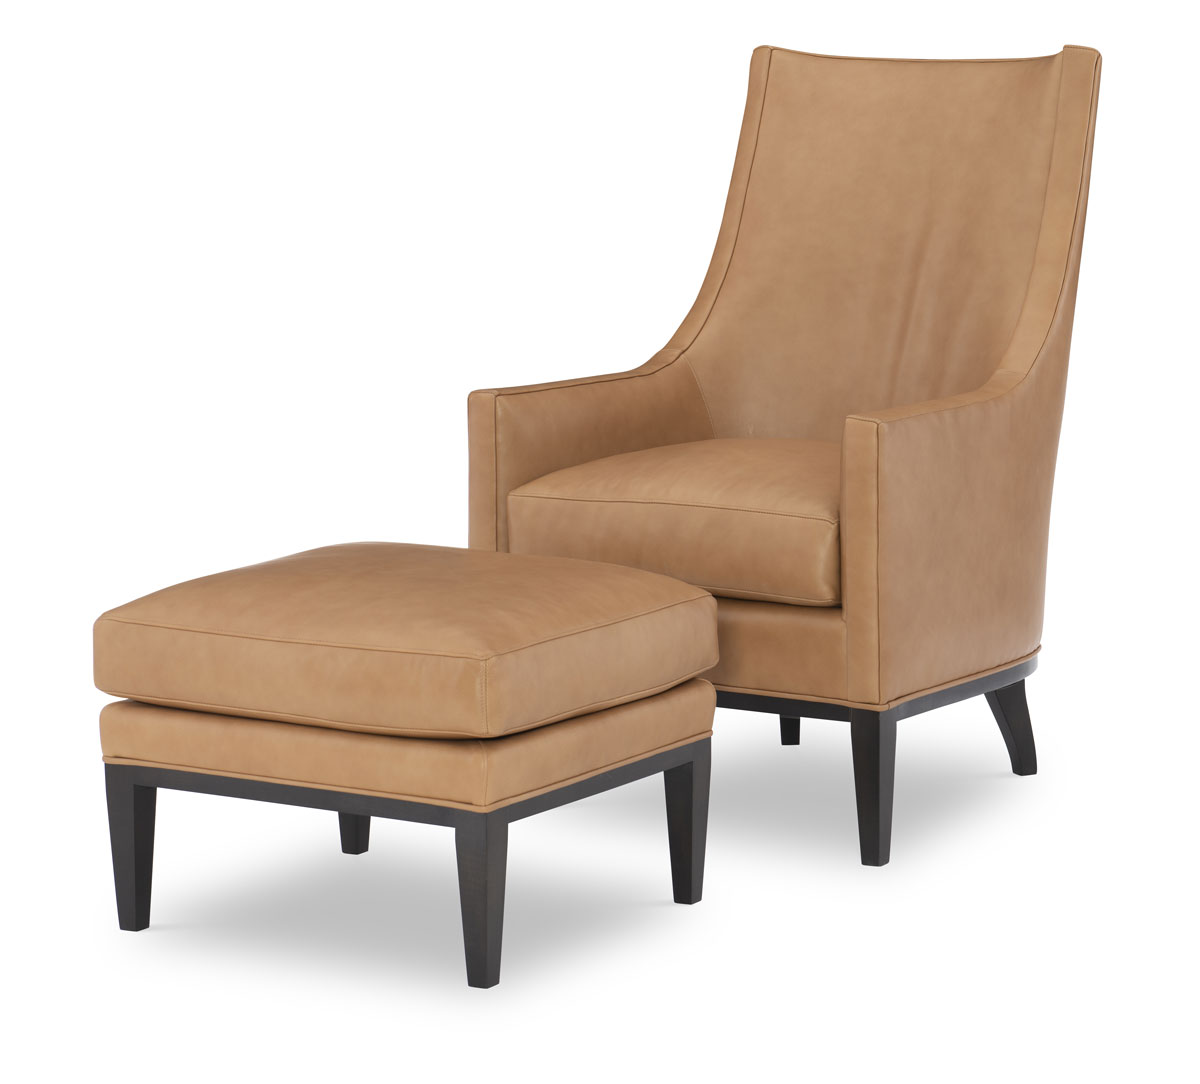 Wesley Hall L504 Quayden Chair and L504-23 Quayden Ottoman